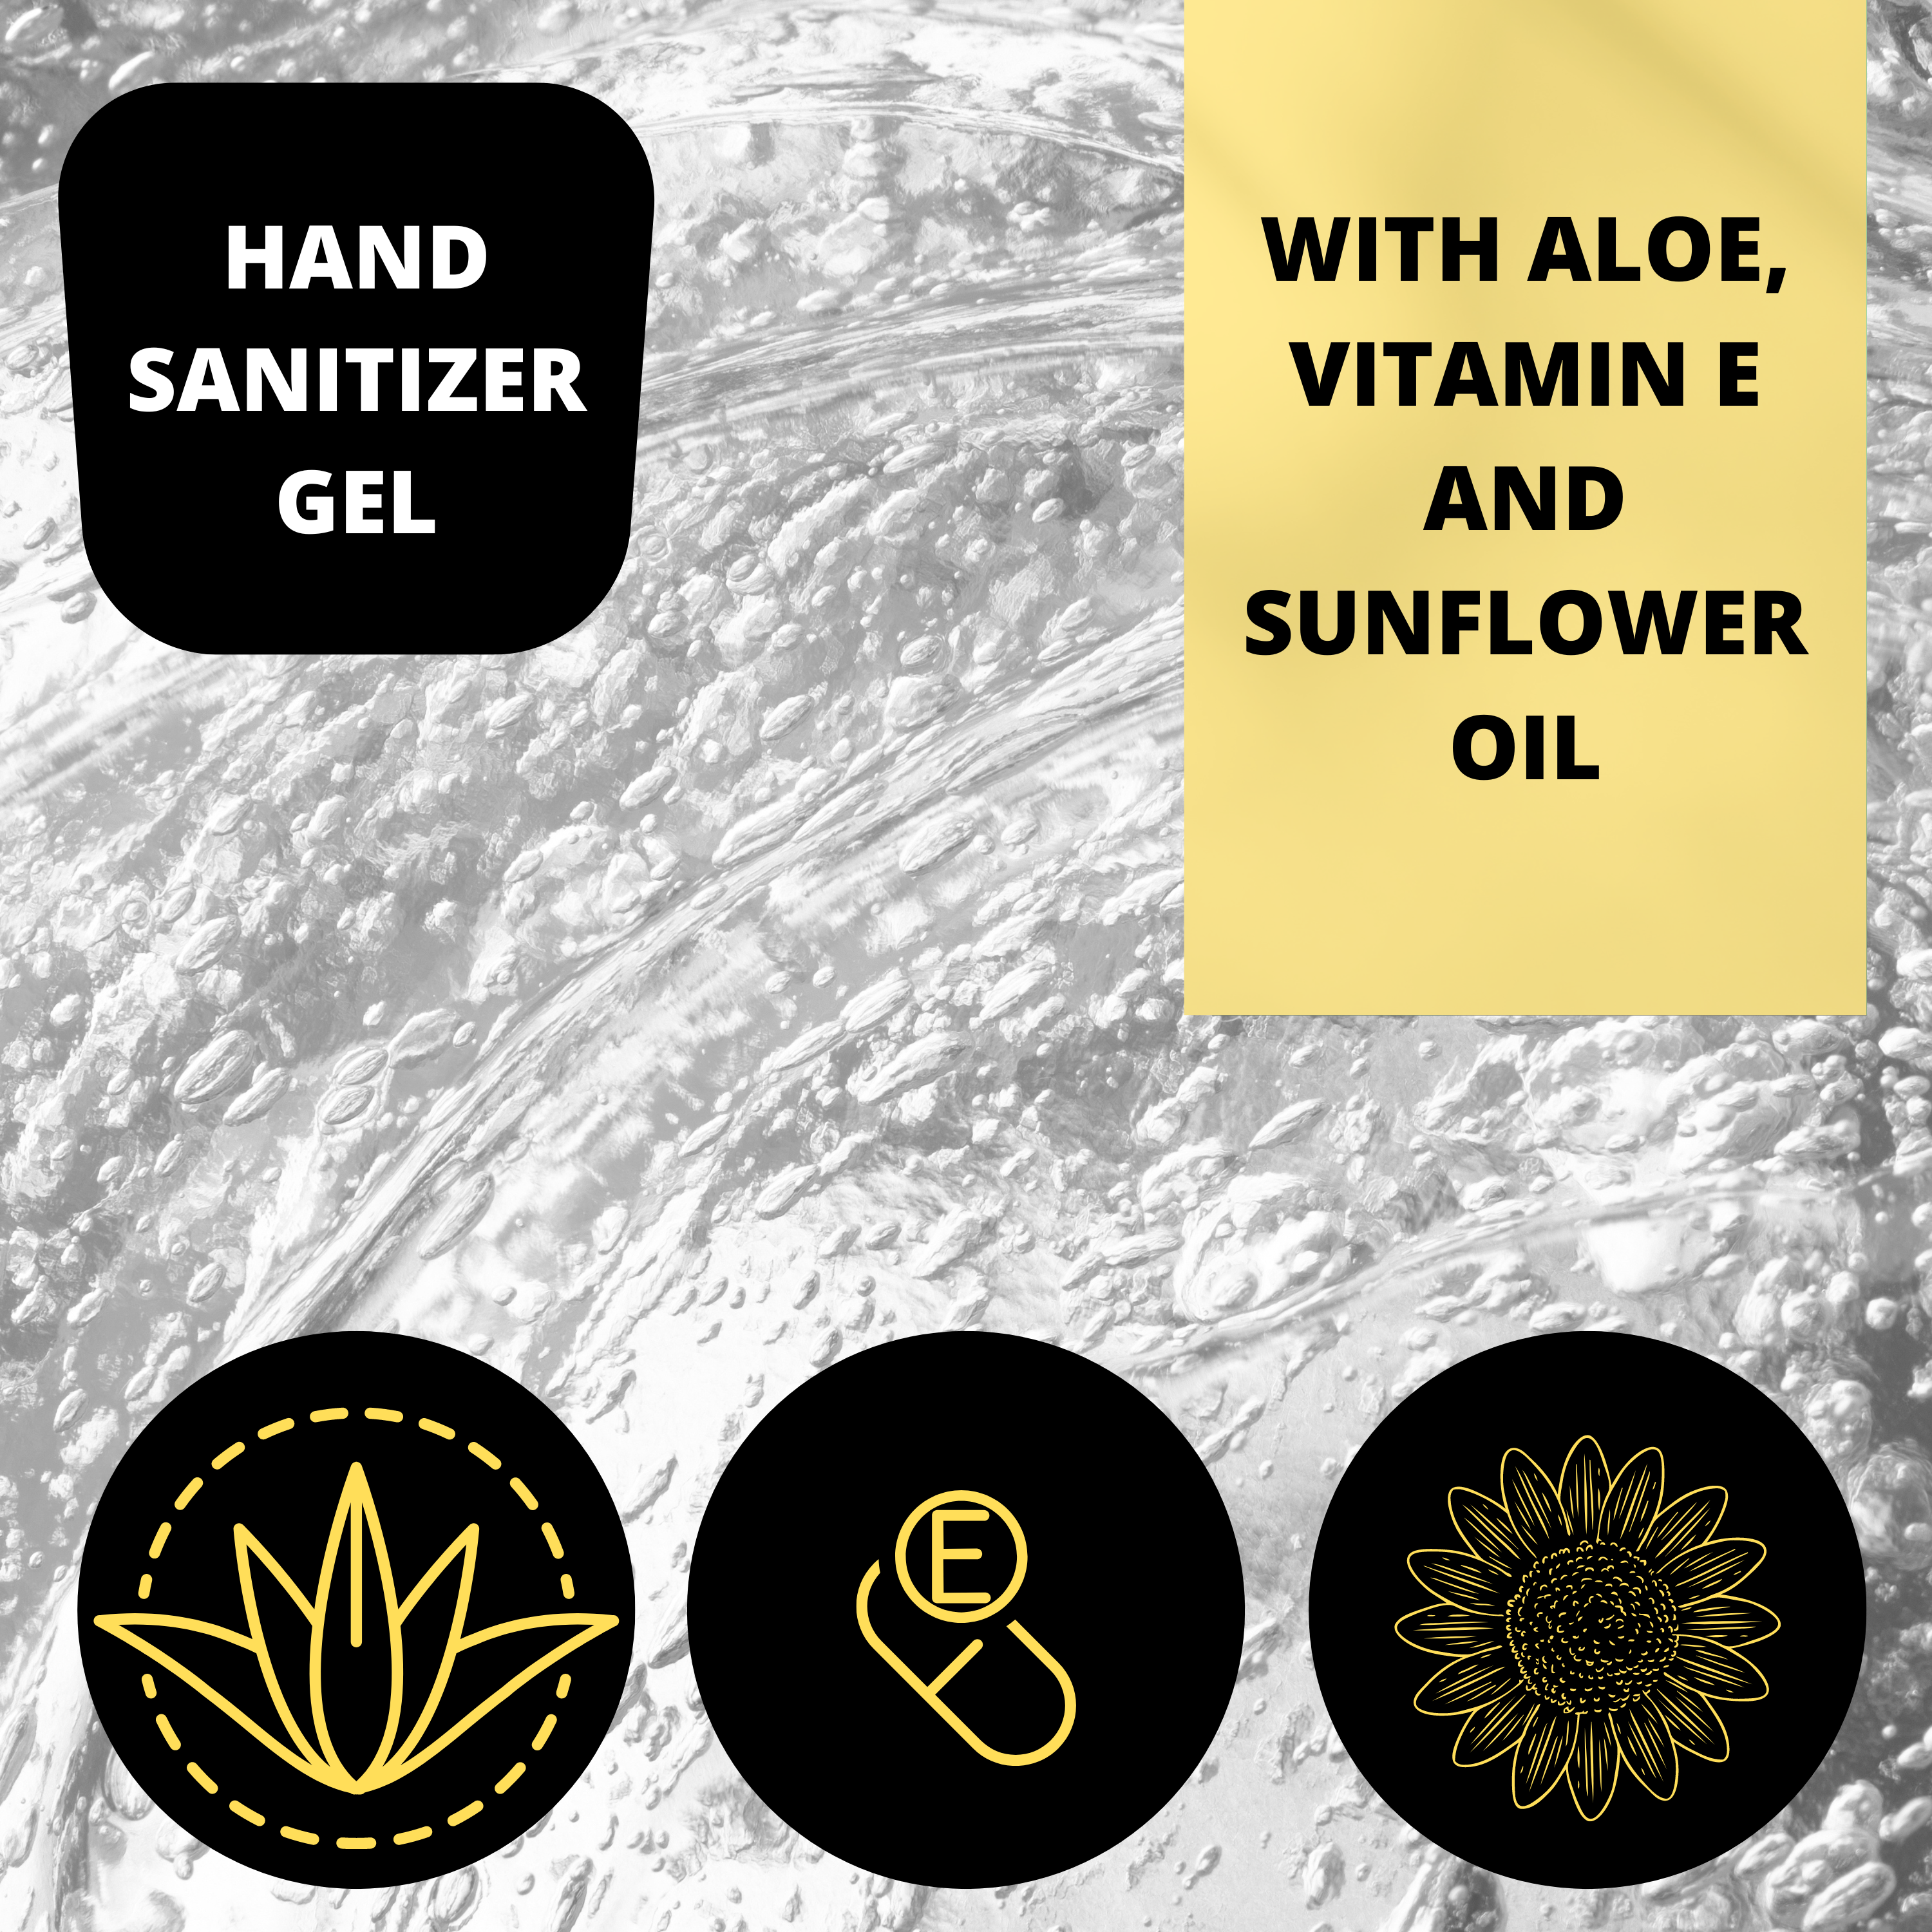 Black Canyon Green Tea & Amber Scented Hand Sanitizer Gel